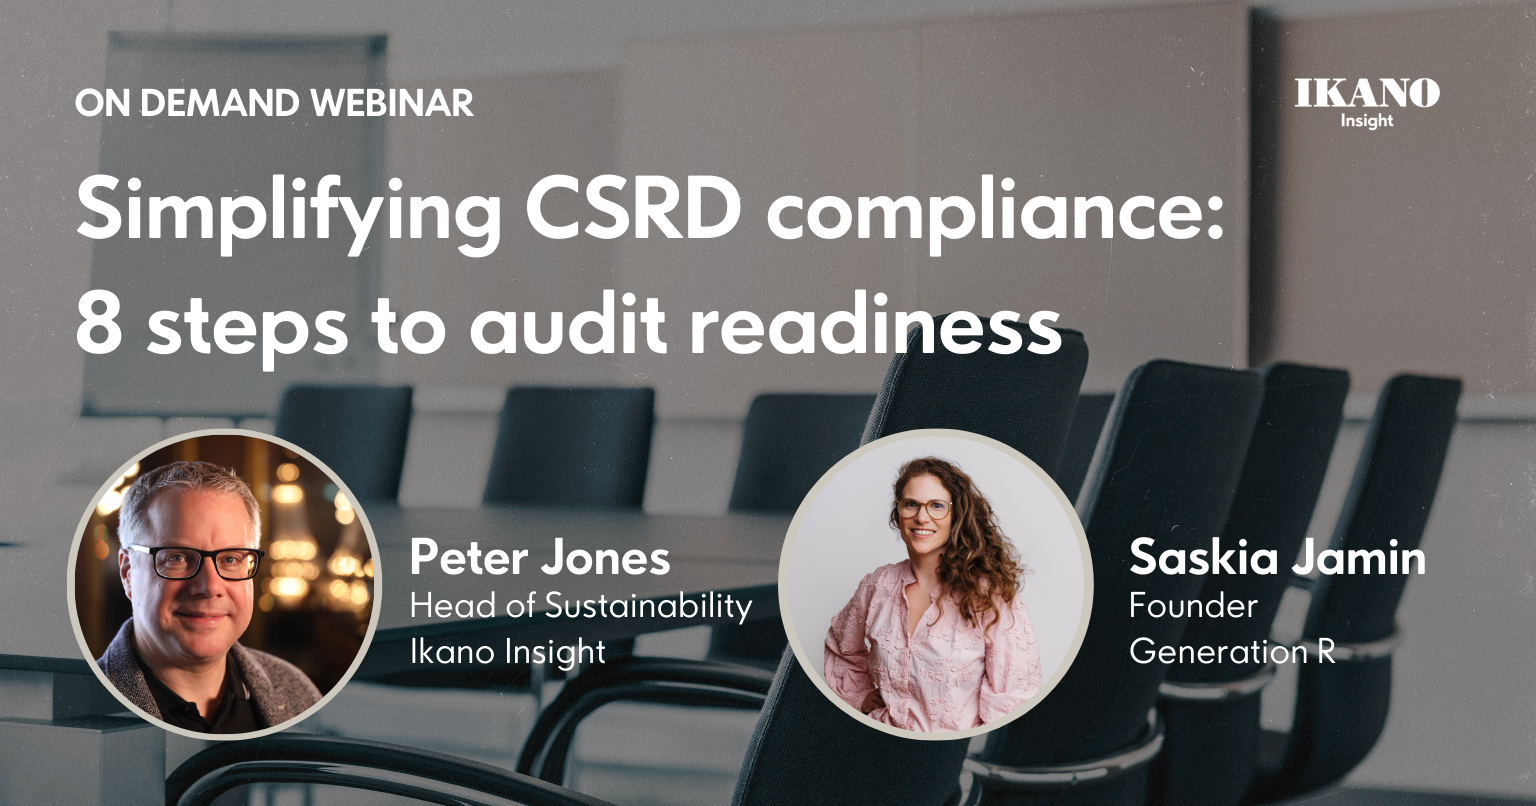 8 steps to CSRD compliance webinar - on demand recording